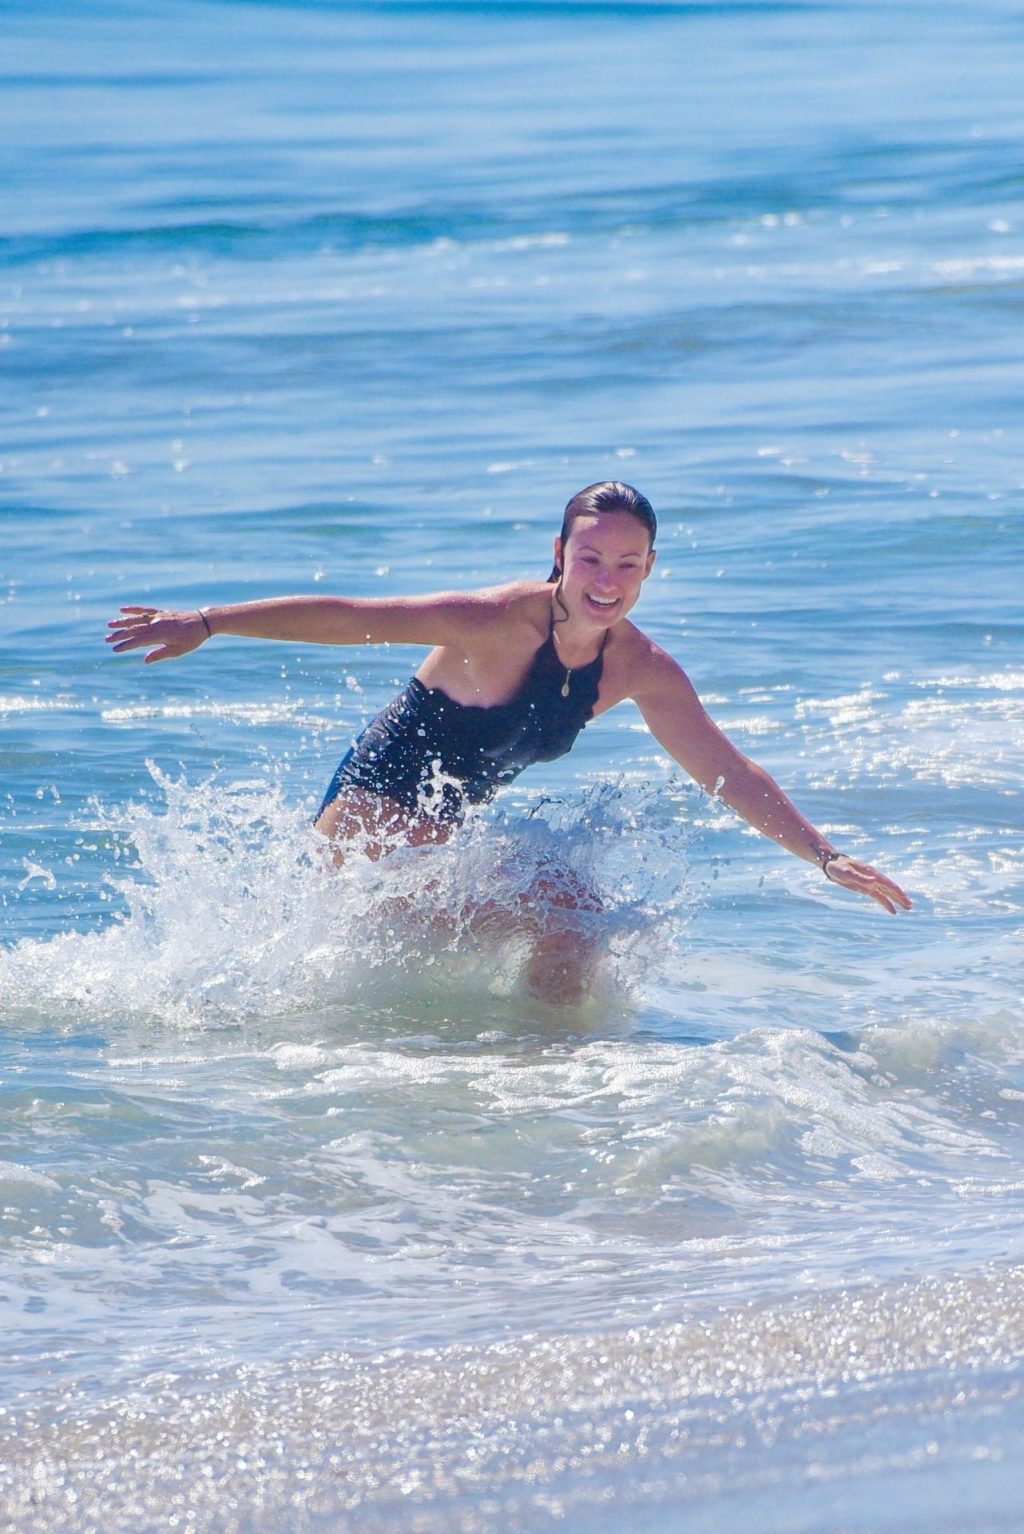 Olivia Wilde Makes a Splash While Enjoying Her Beach Day in Malibu (38 Photos)